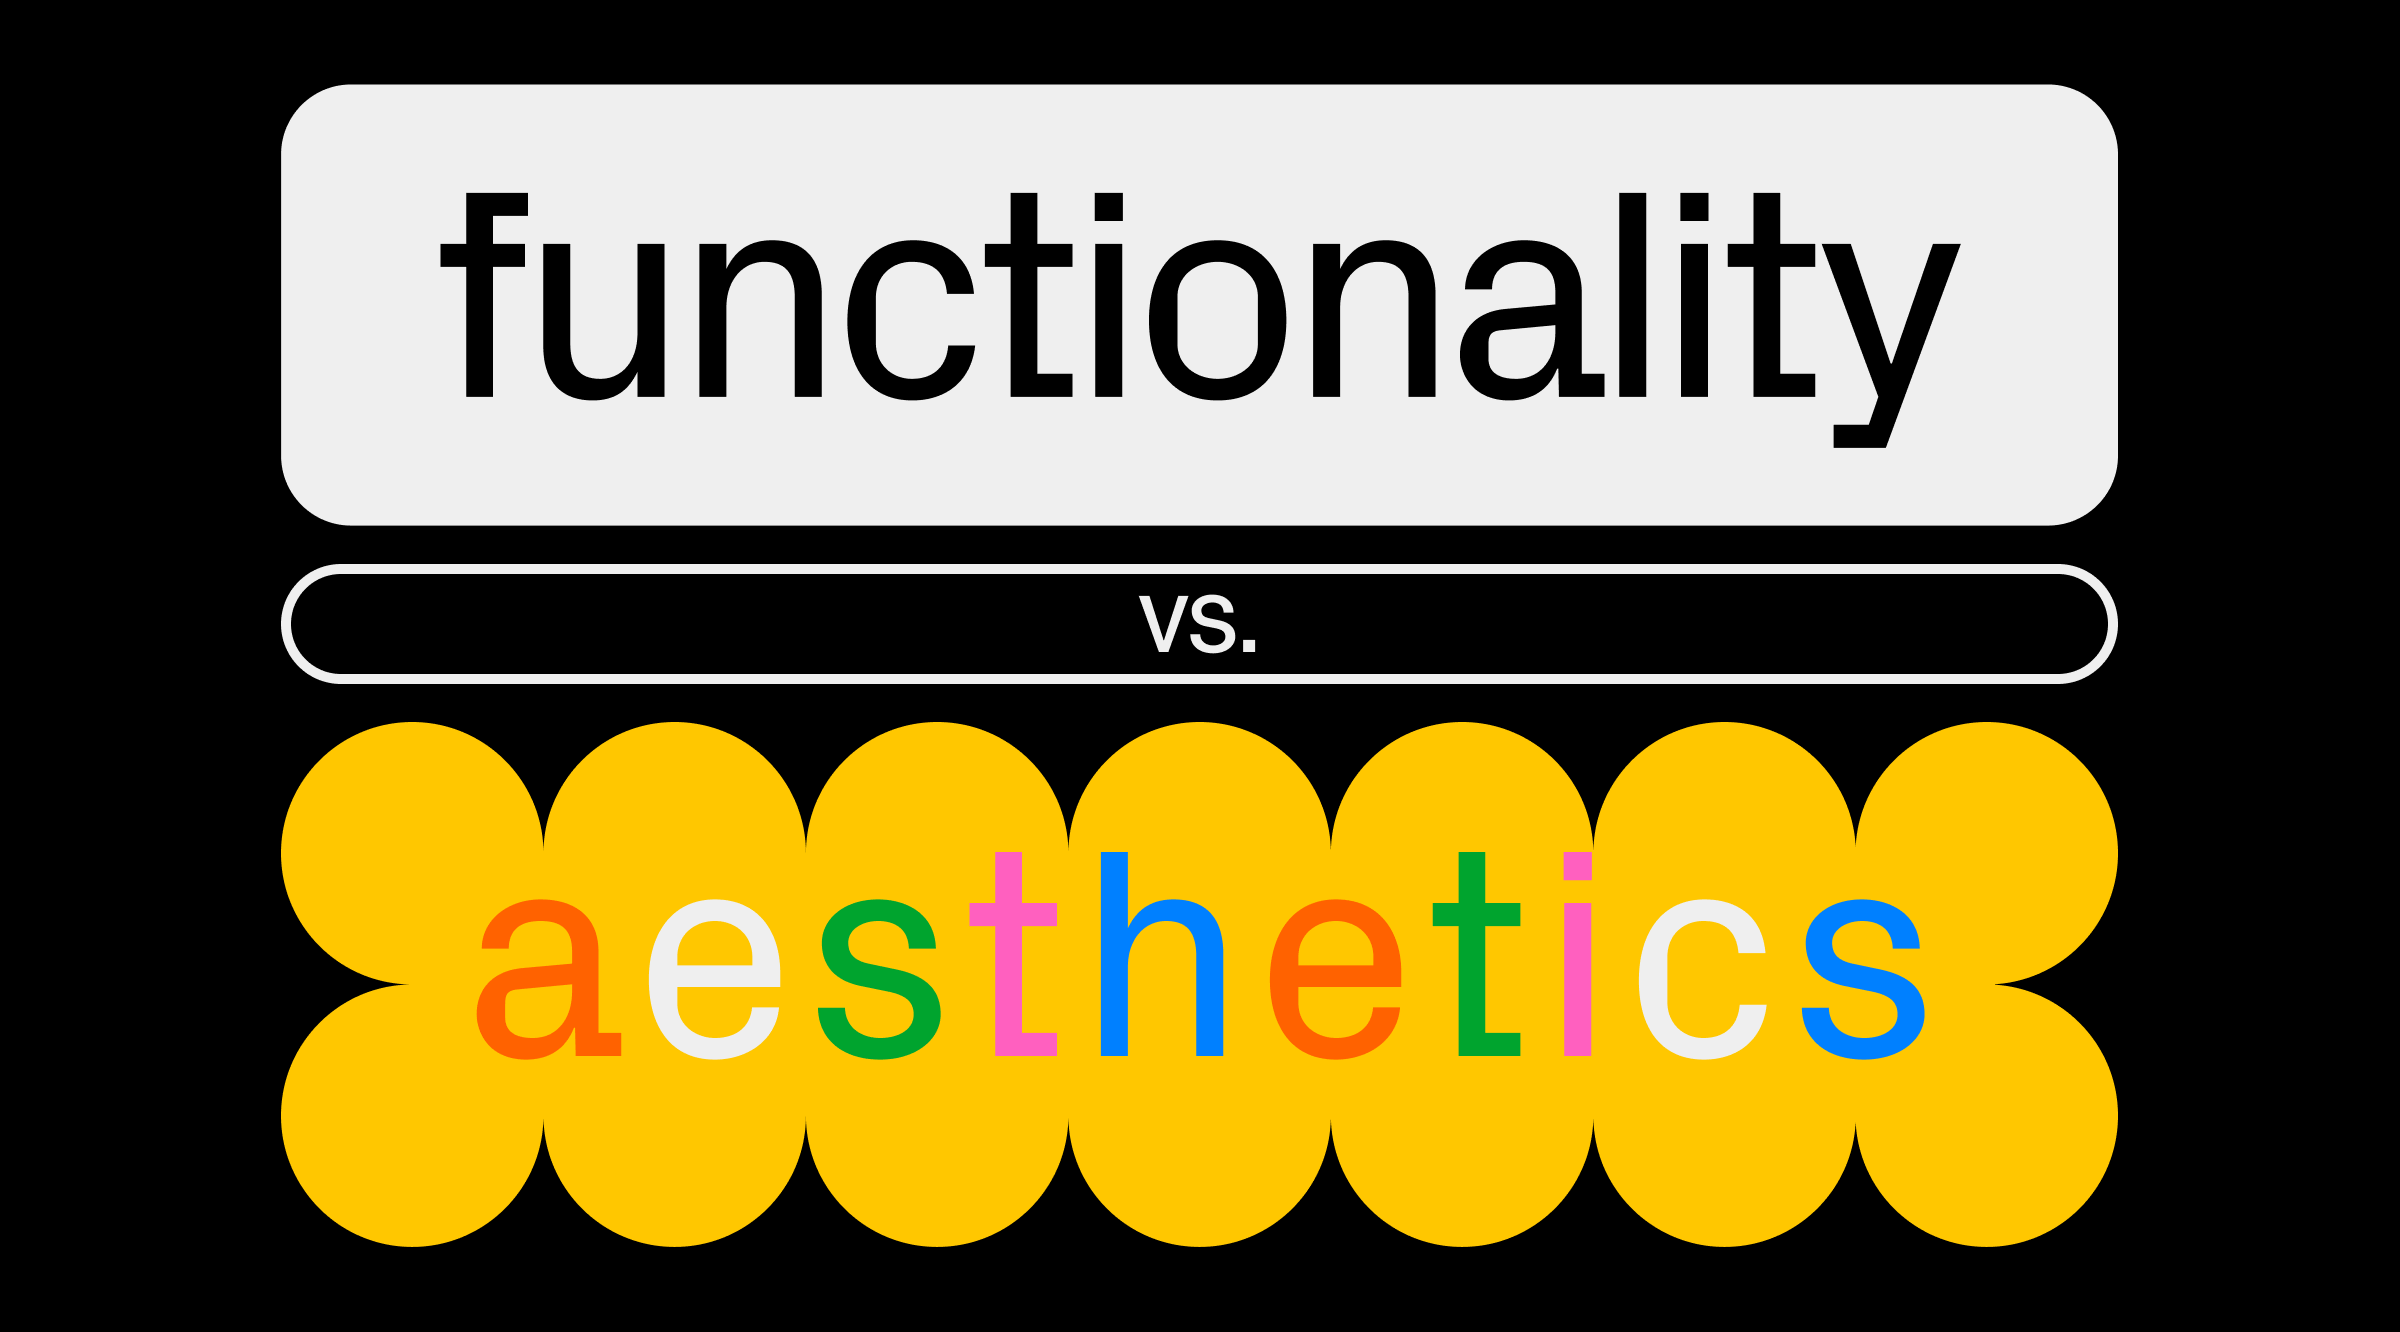 Functionality vs. aesthetics in design